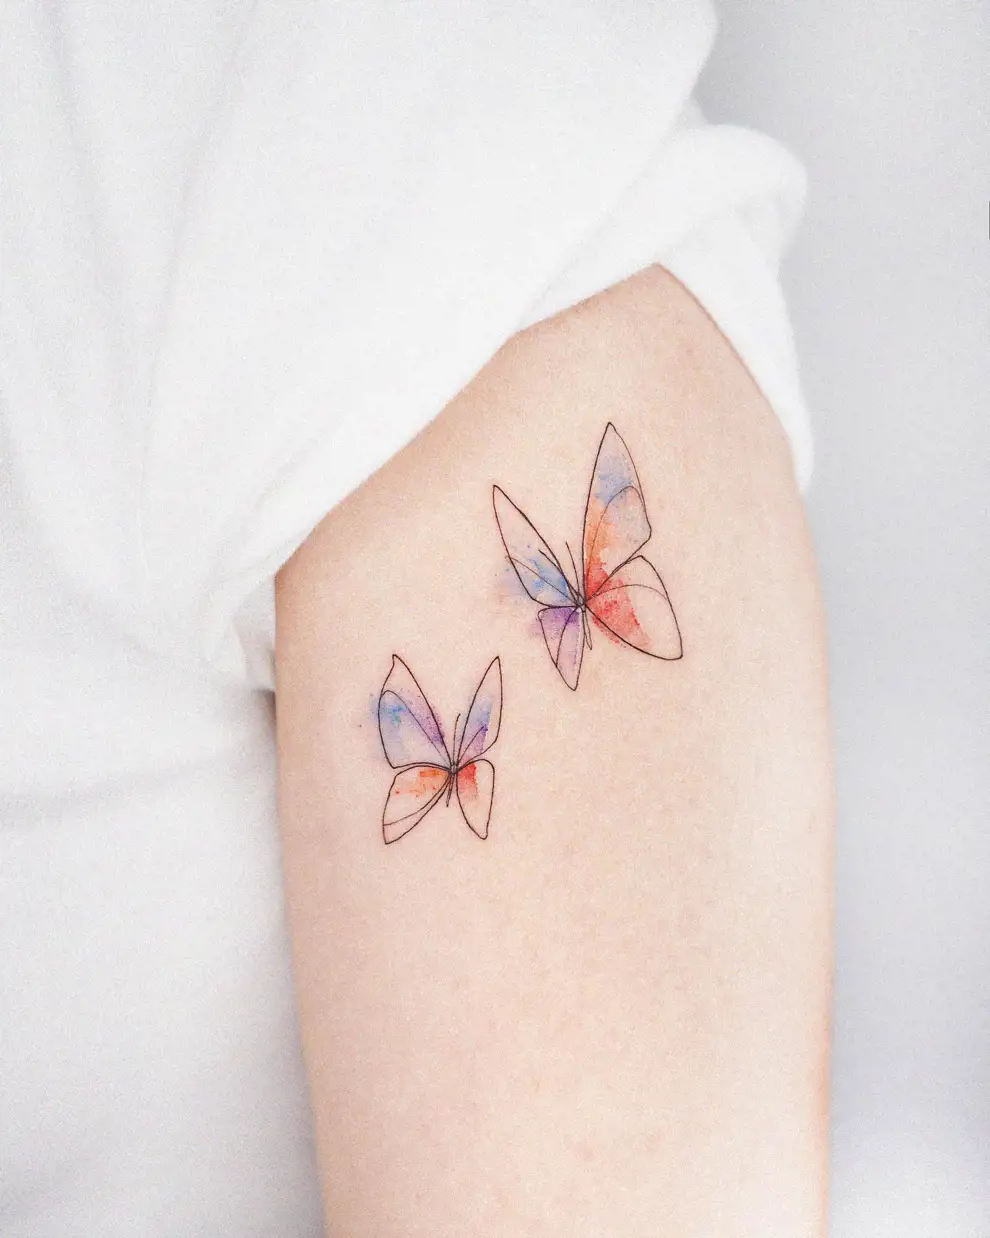 Tatuaje mariposa minimalista: acuarela